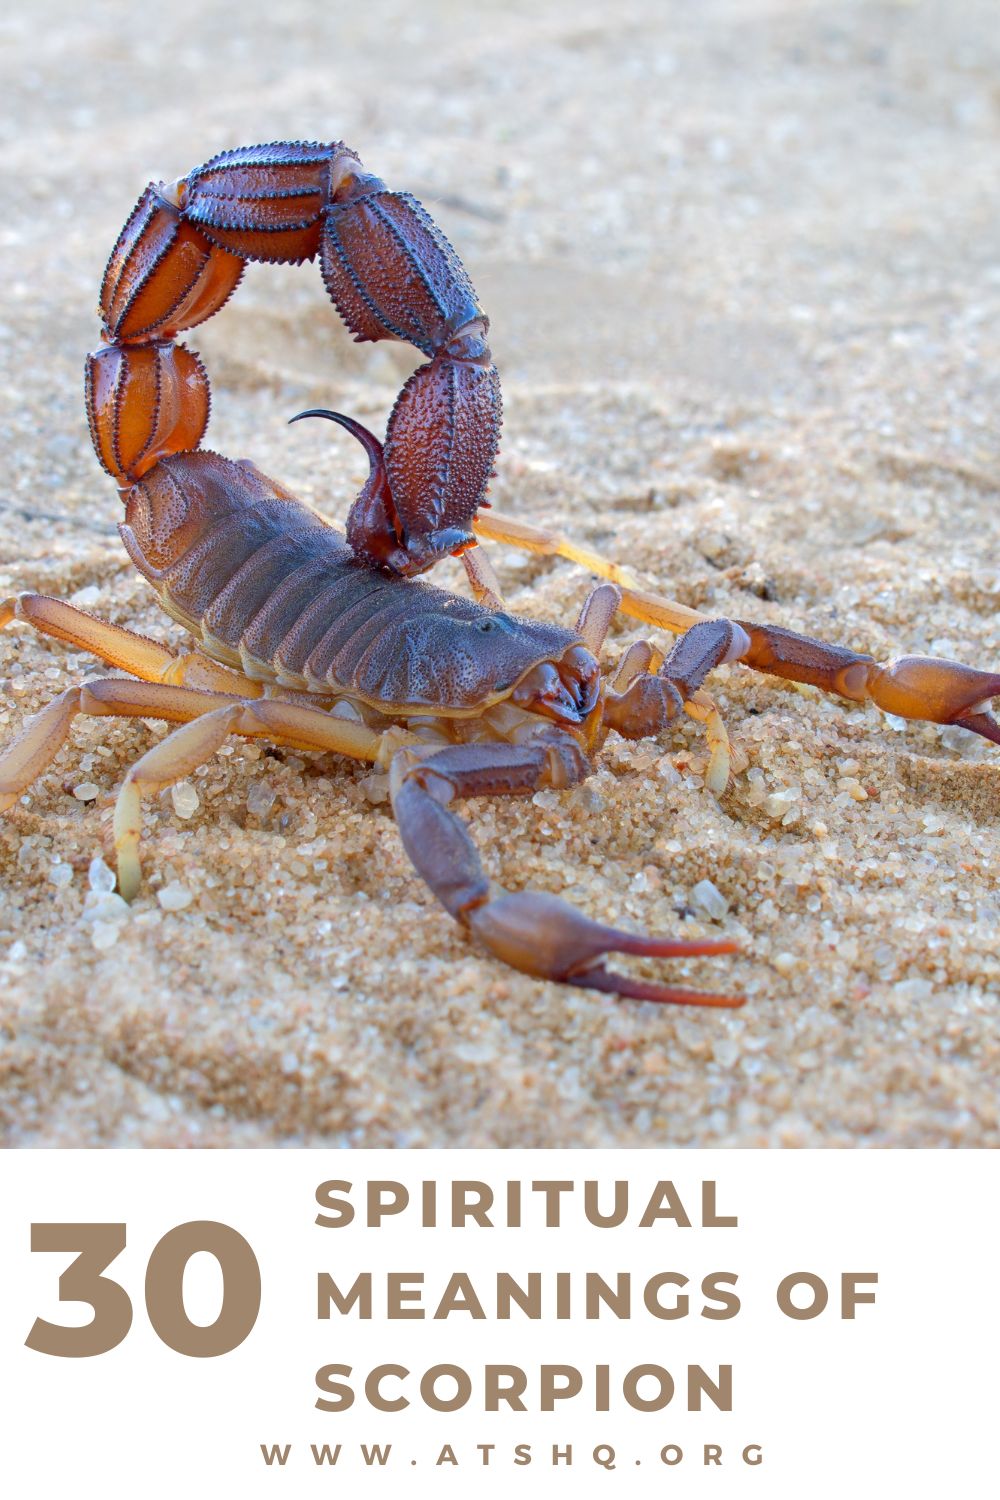 Scorpion Symbolism: 30 Spiritual Meanings Of Scorpion